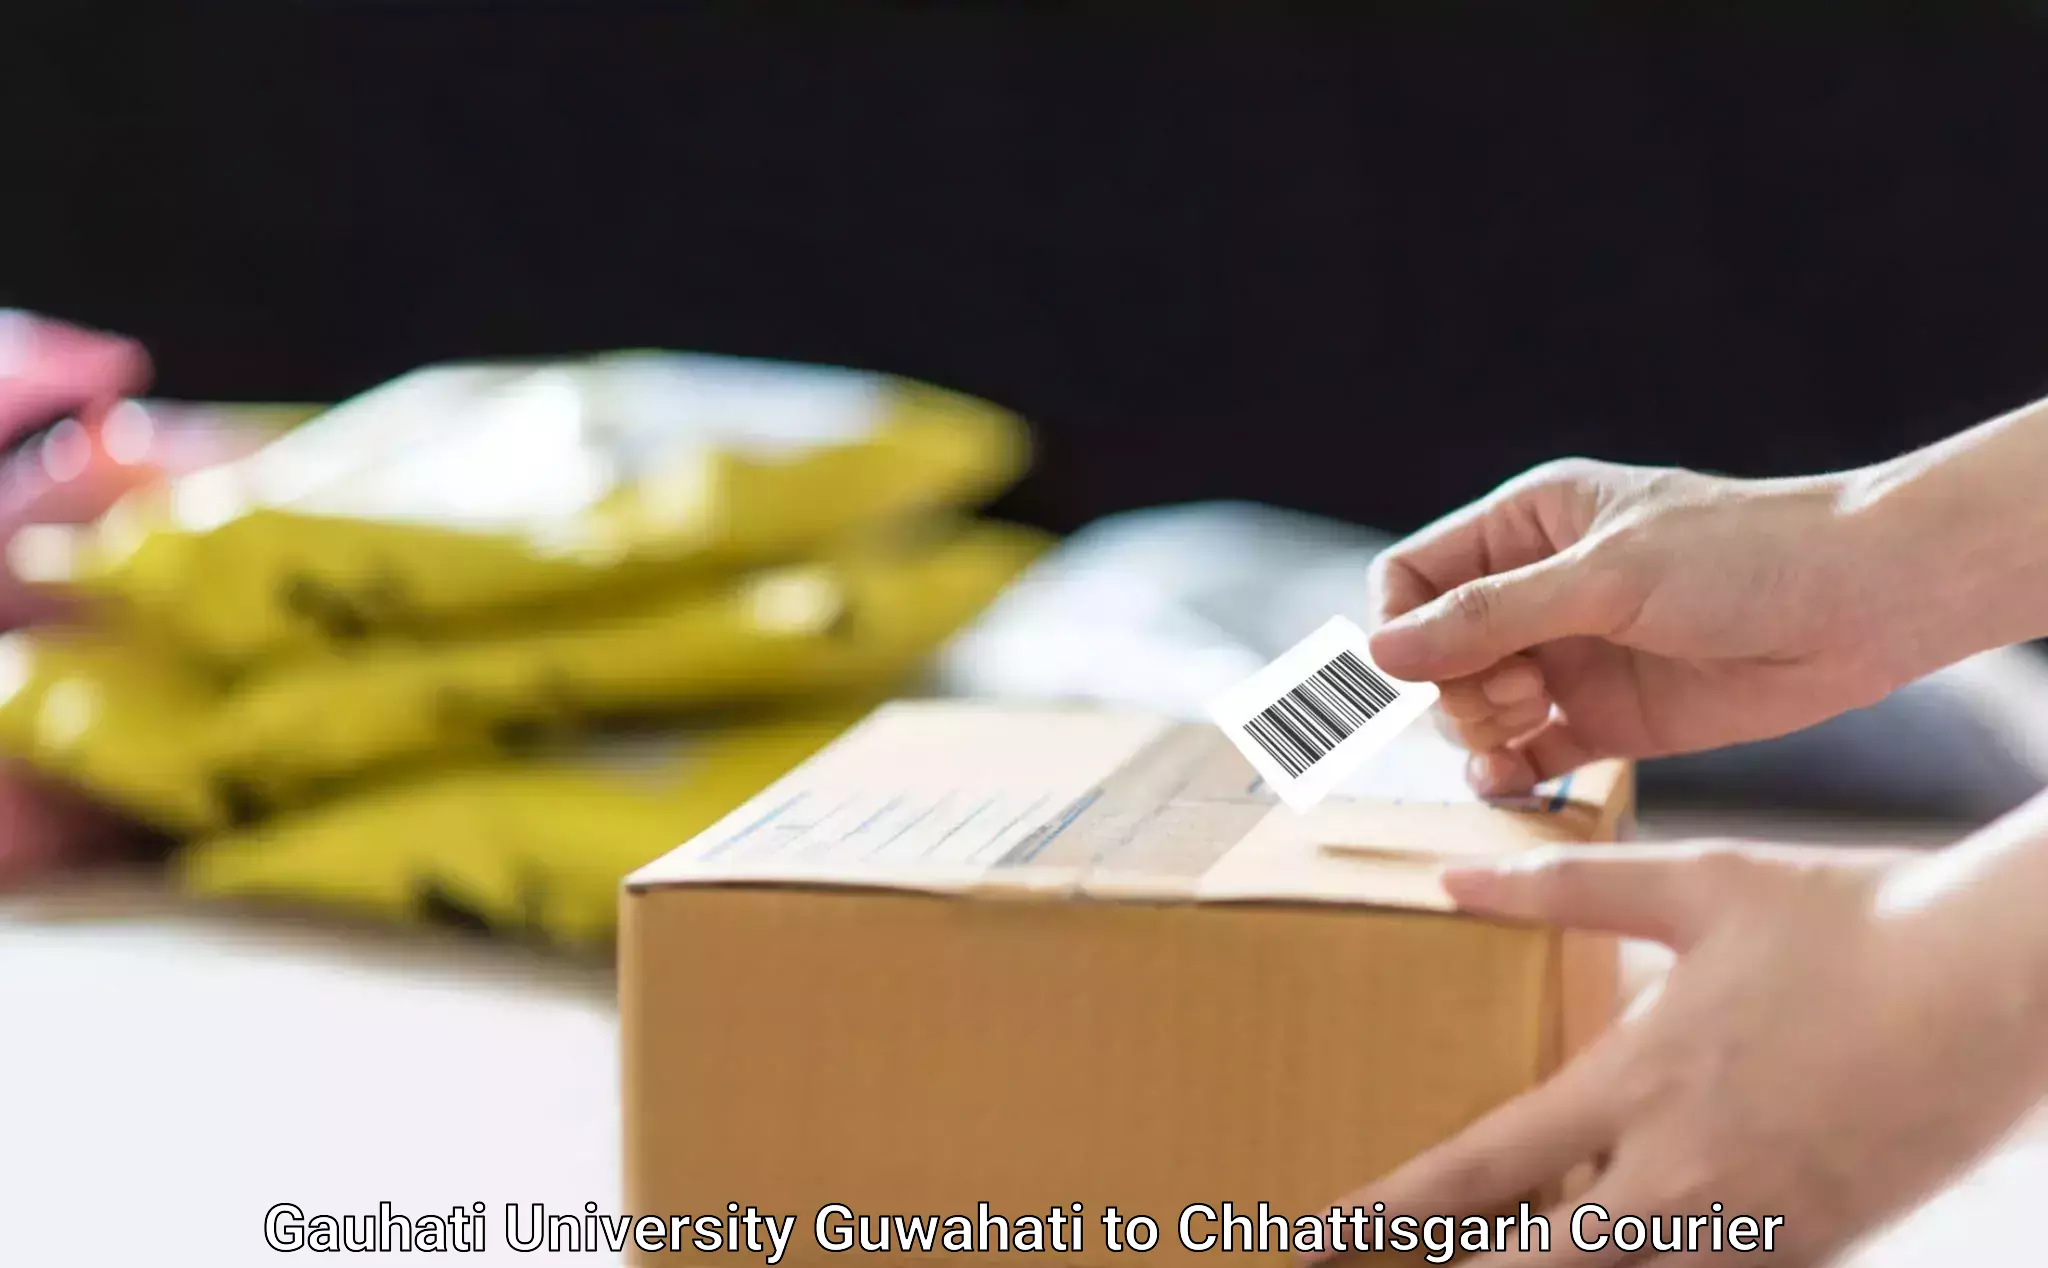 Package delivery network Gauhati University Guwahati to Bhilai